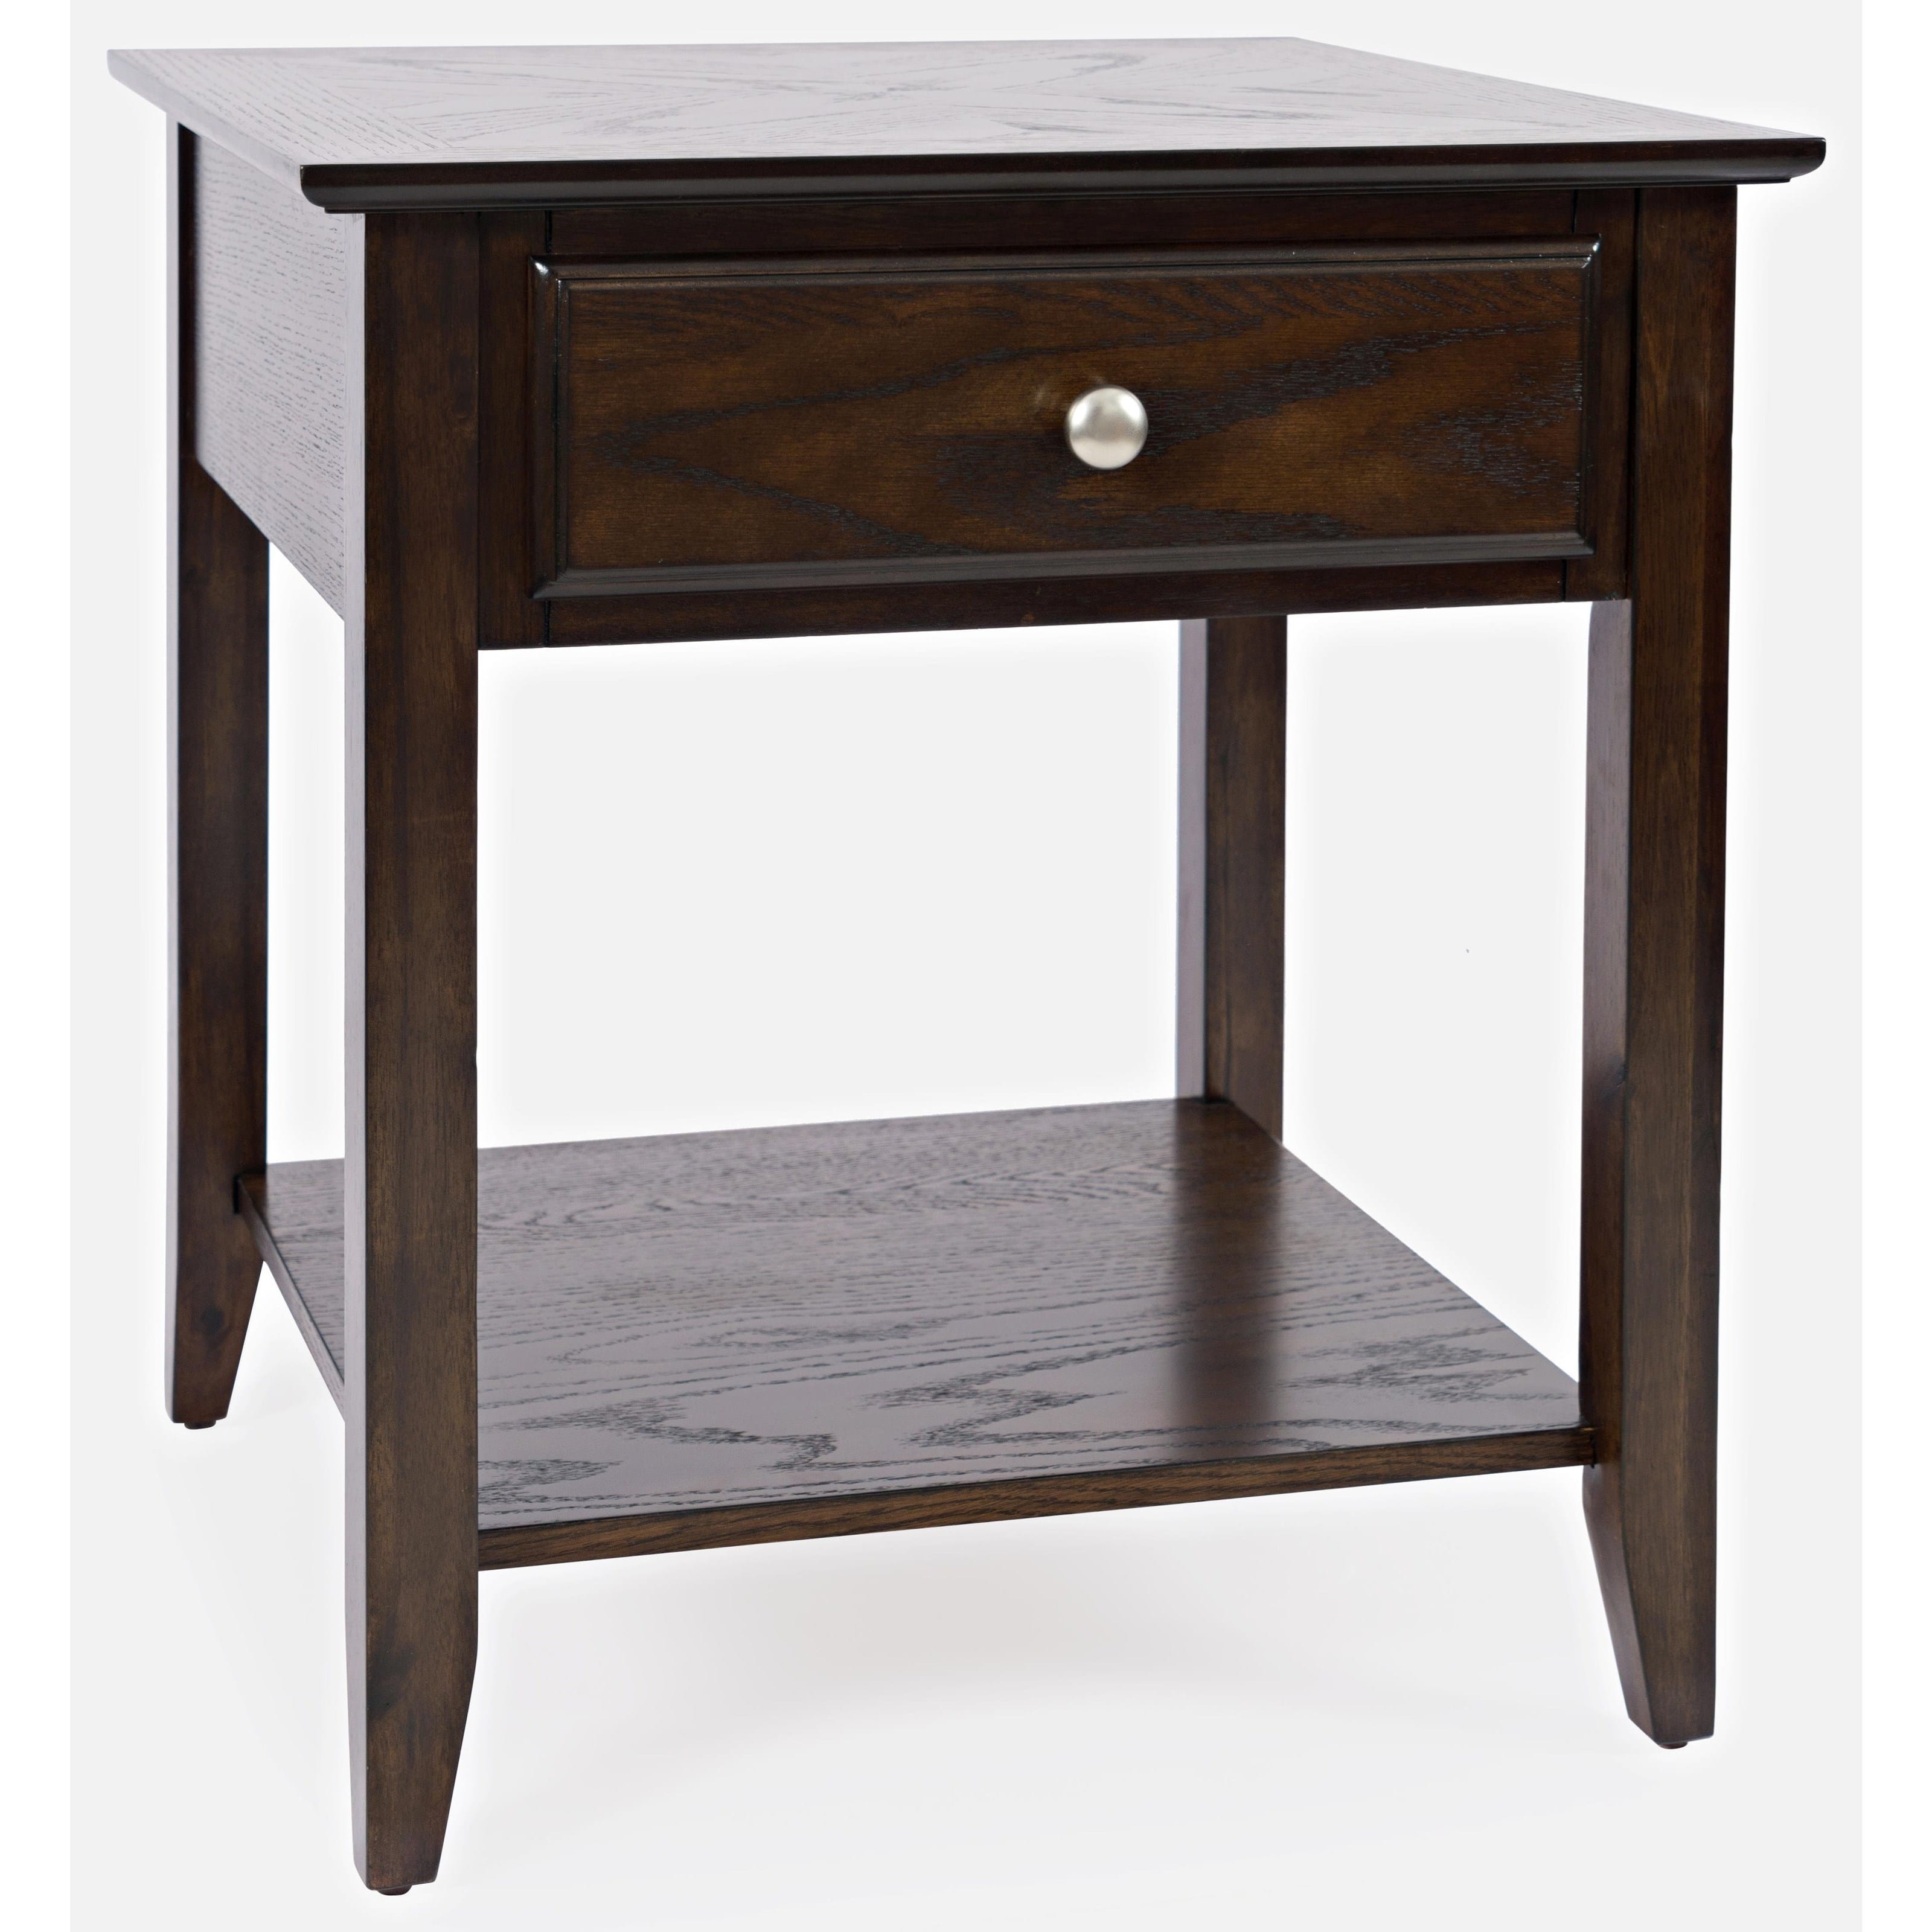 Espresso Dark Brown Wood End Table w/Drawer & Shelf by Jofran Furniture